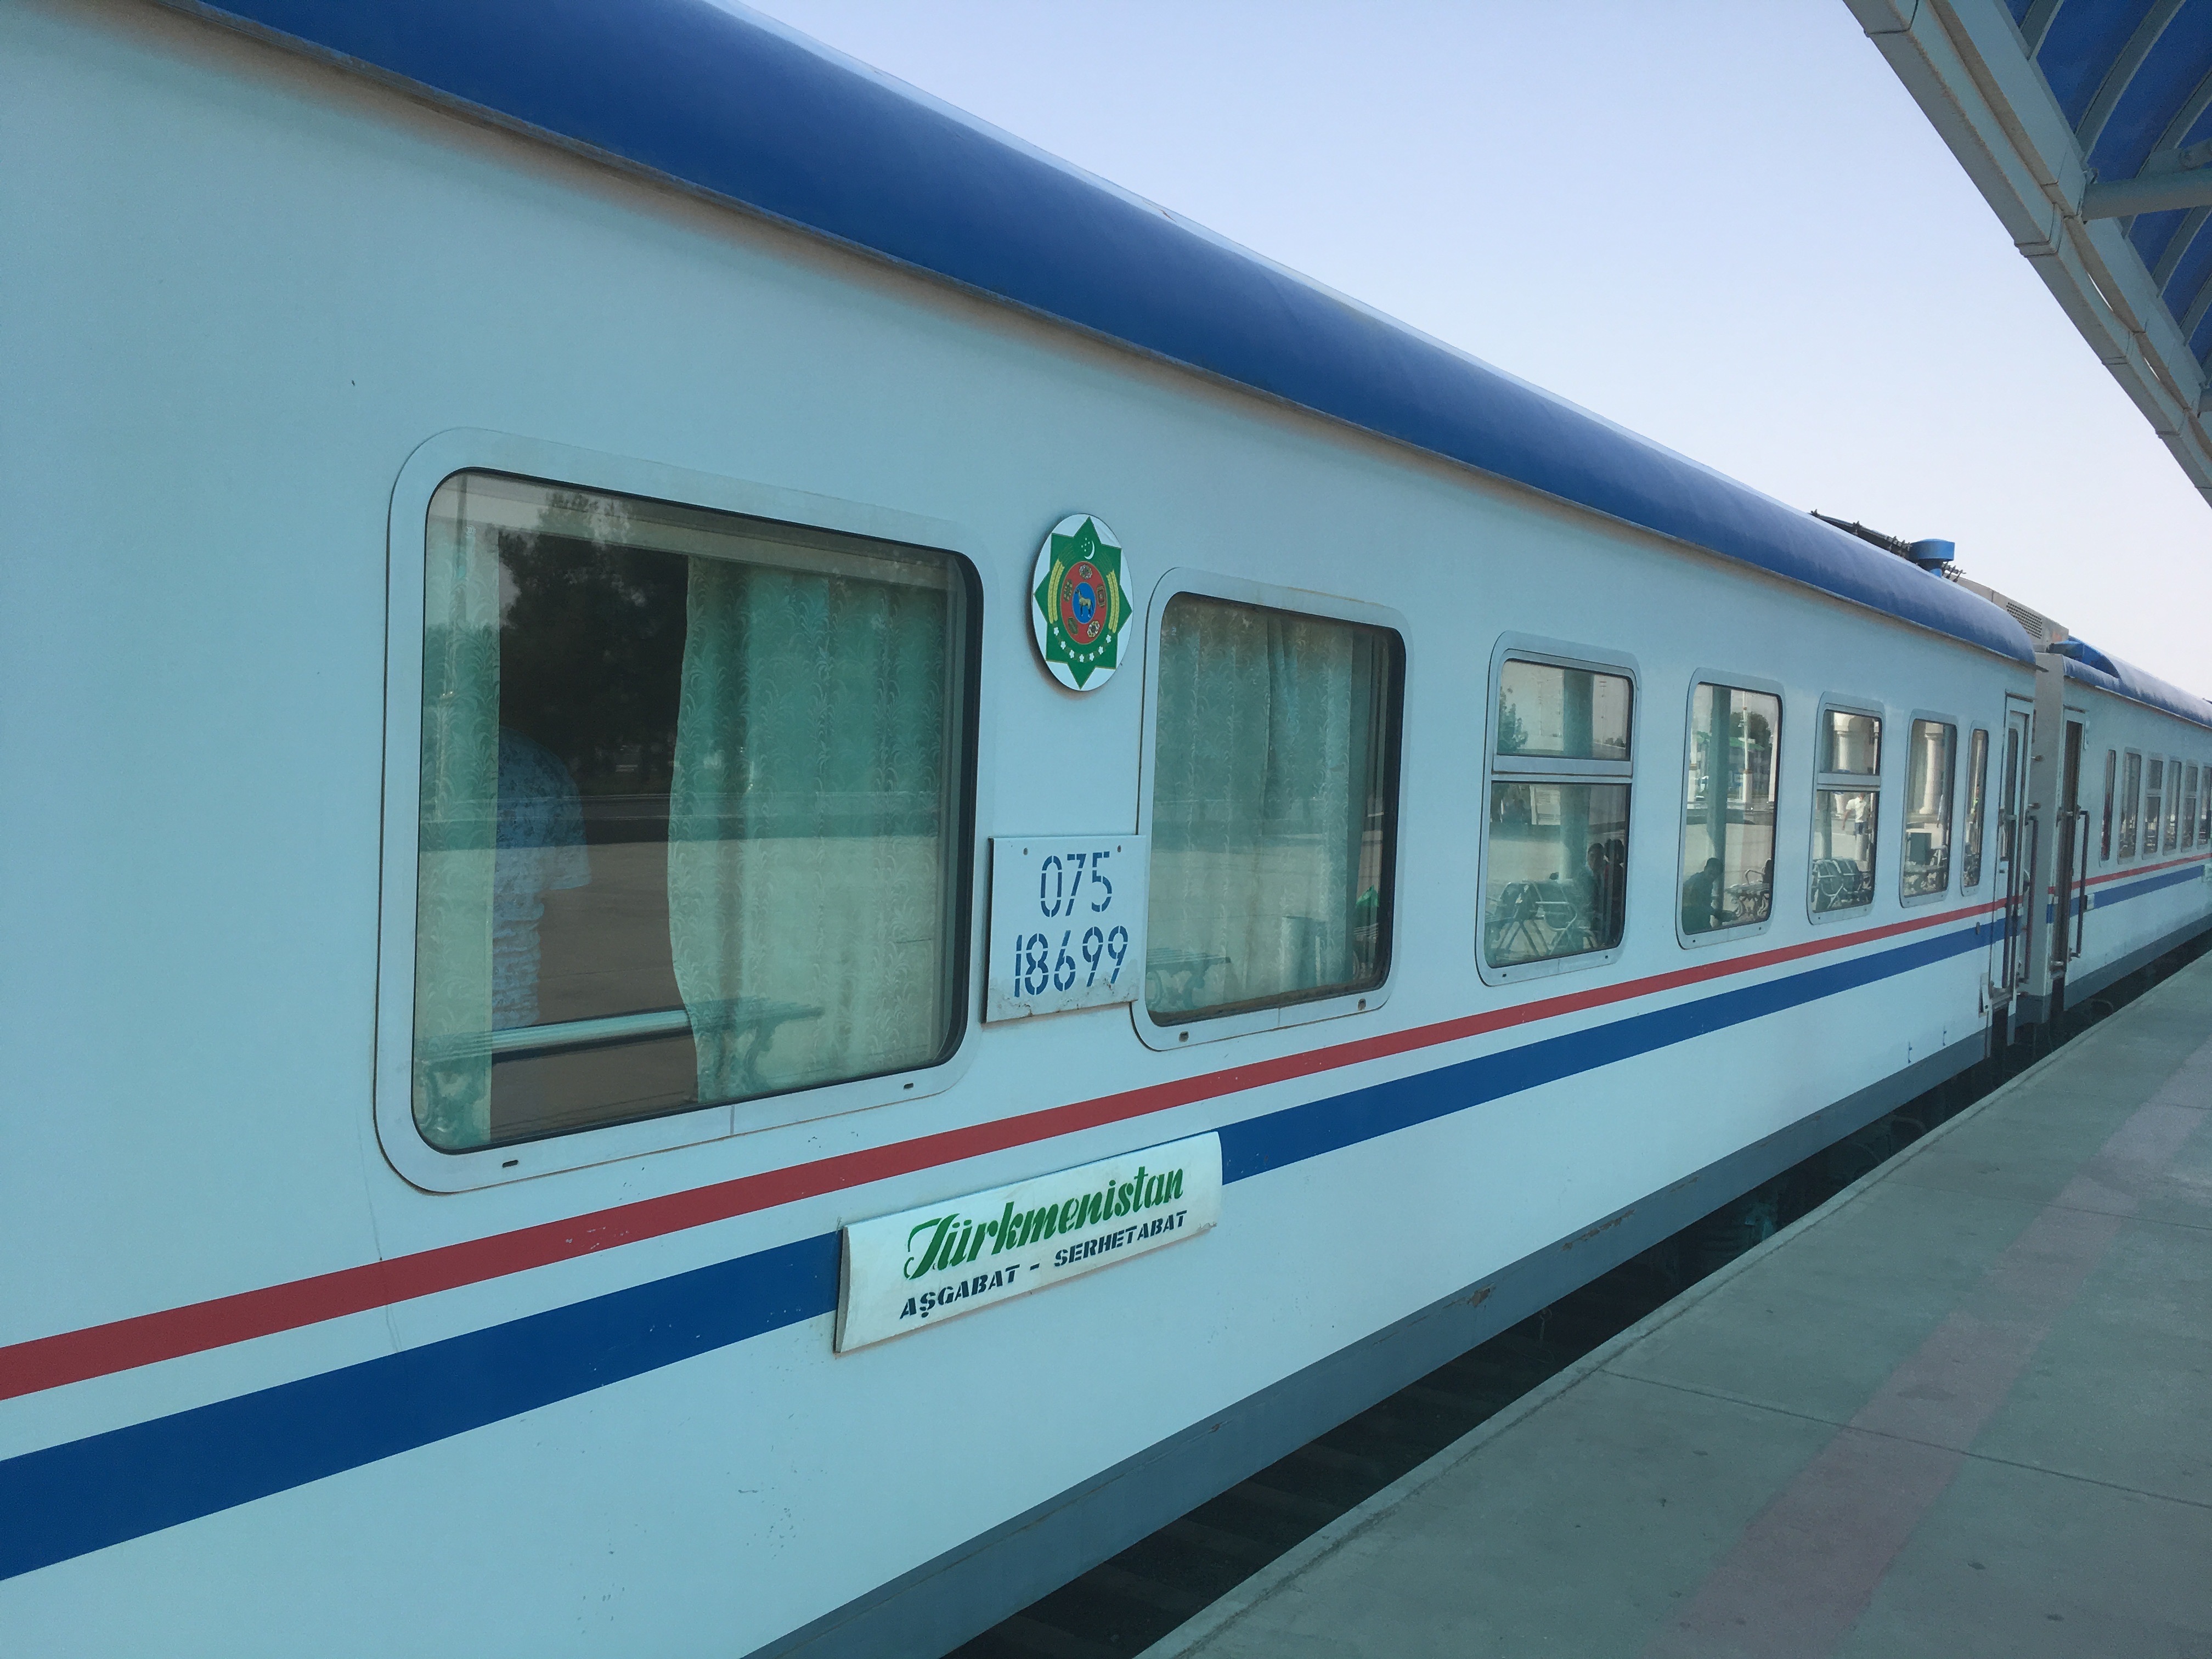 Tuesday Train – Ashgabat in Turkmenistan